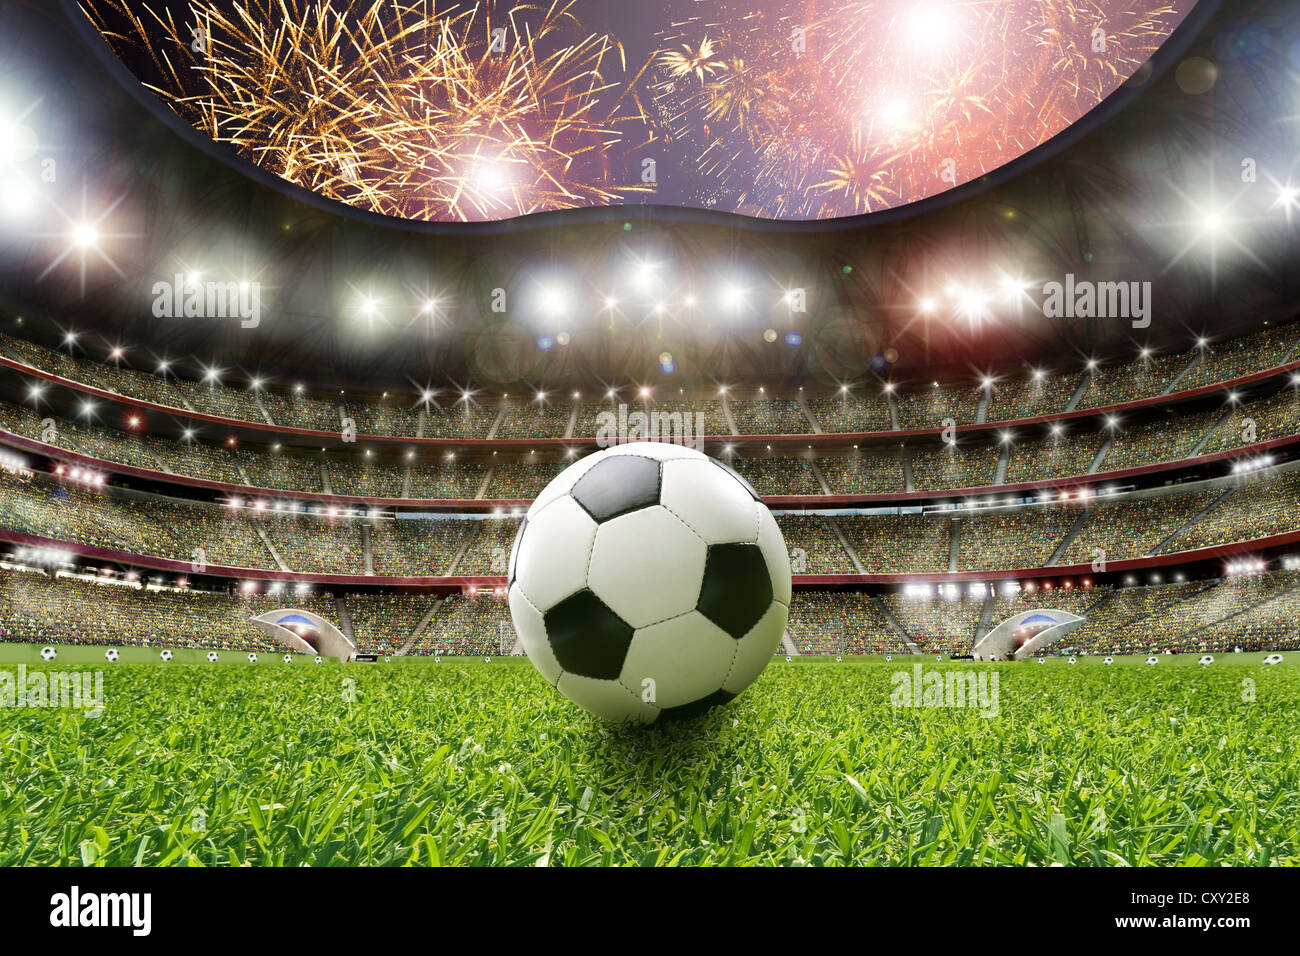 Soccer ball, soccer stadium, lawn, grand stand, fireworks Stock Photo